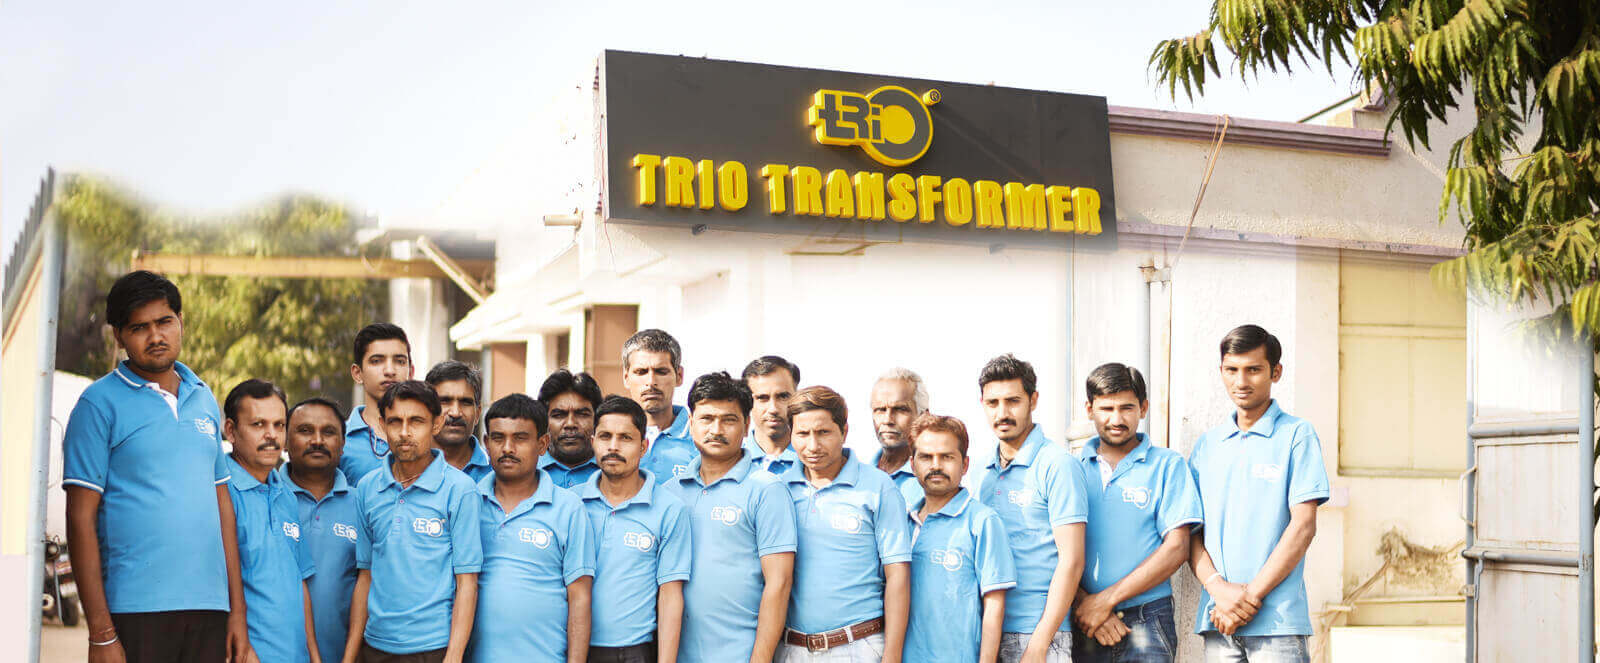 Employees of Trio transformer